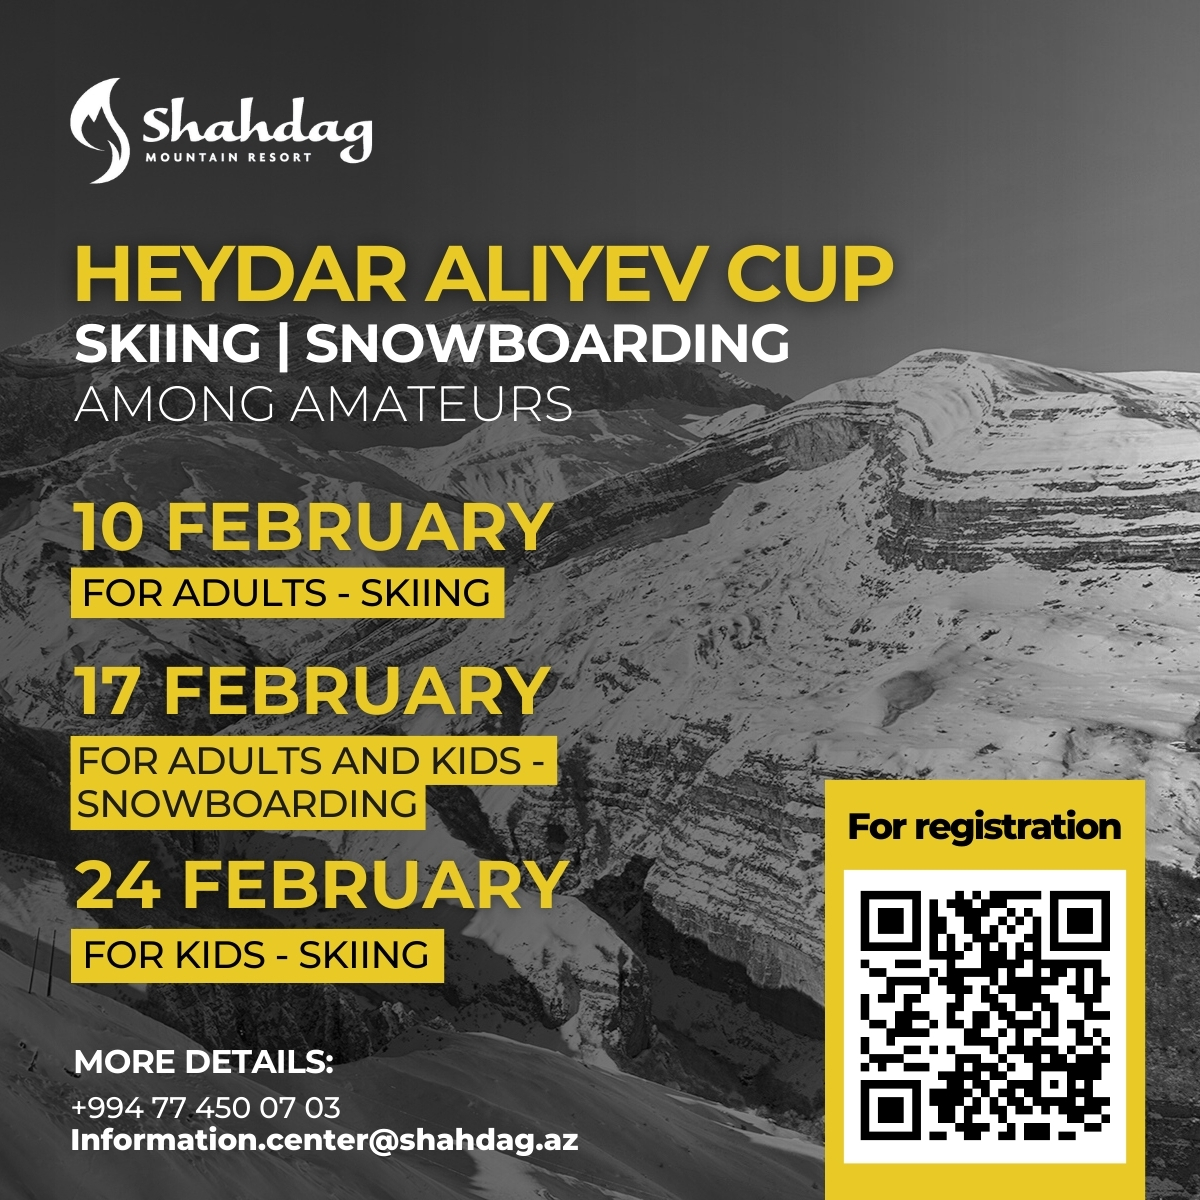 Heydar Aliyev Cup - Registration Now Open!